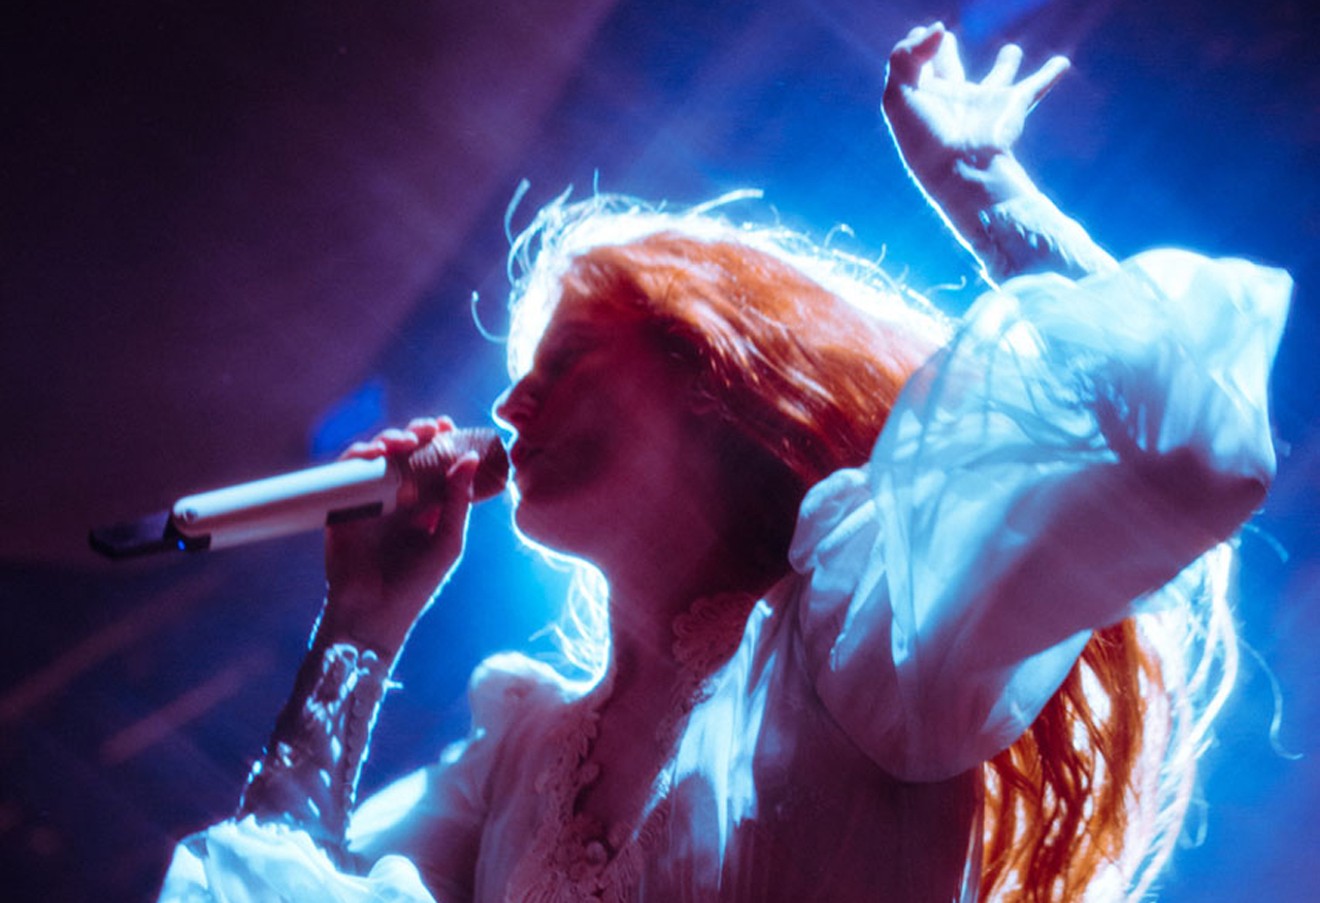 Florence + the Machine will headline Grandoozy on Saturday, September 15.